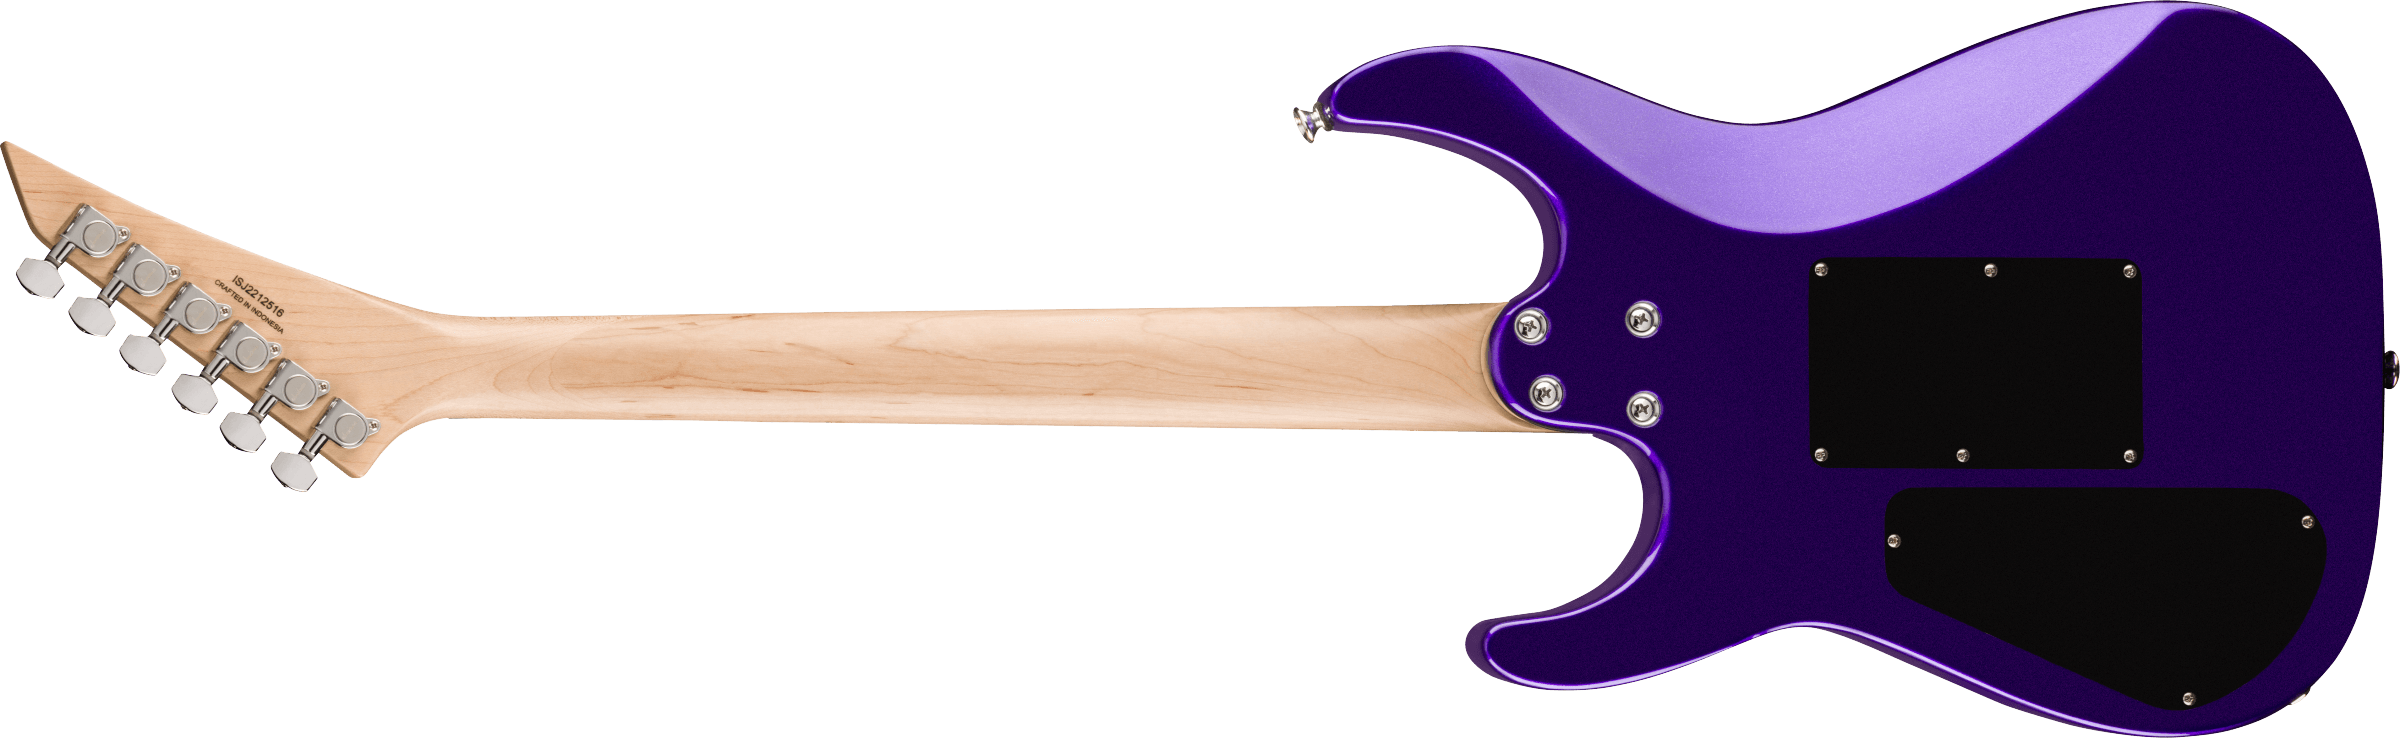 Jackson Dinky Dk3xr Hss Fr Mn - Deep Purple Metallic - Str shape electric guitar - Variation 2